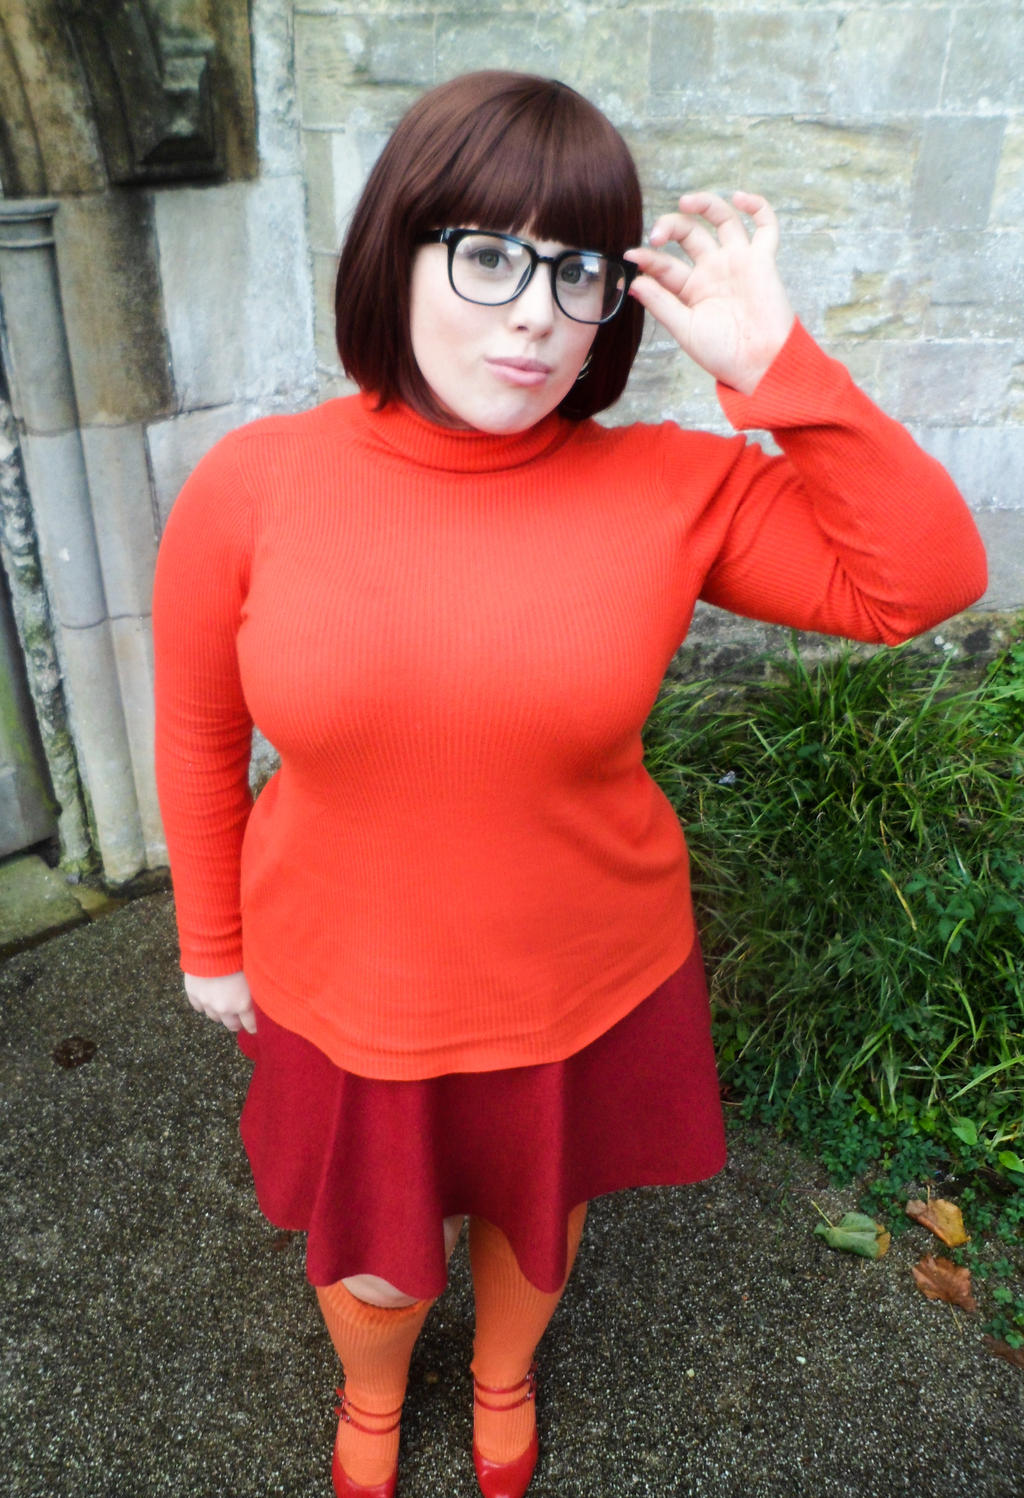 Velma Cosplay #9 by QuinnCrimson on DeviantArt